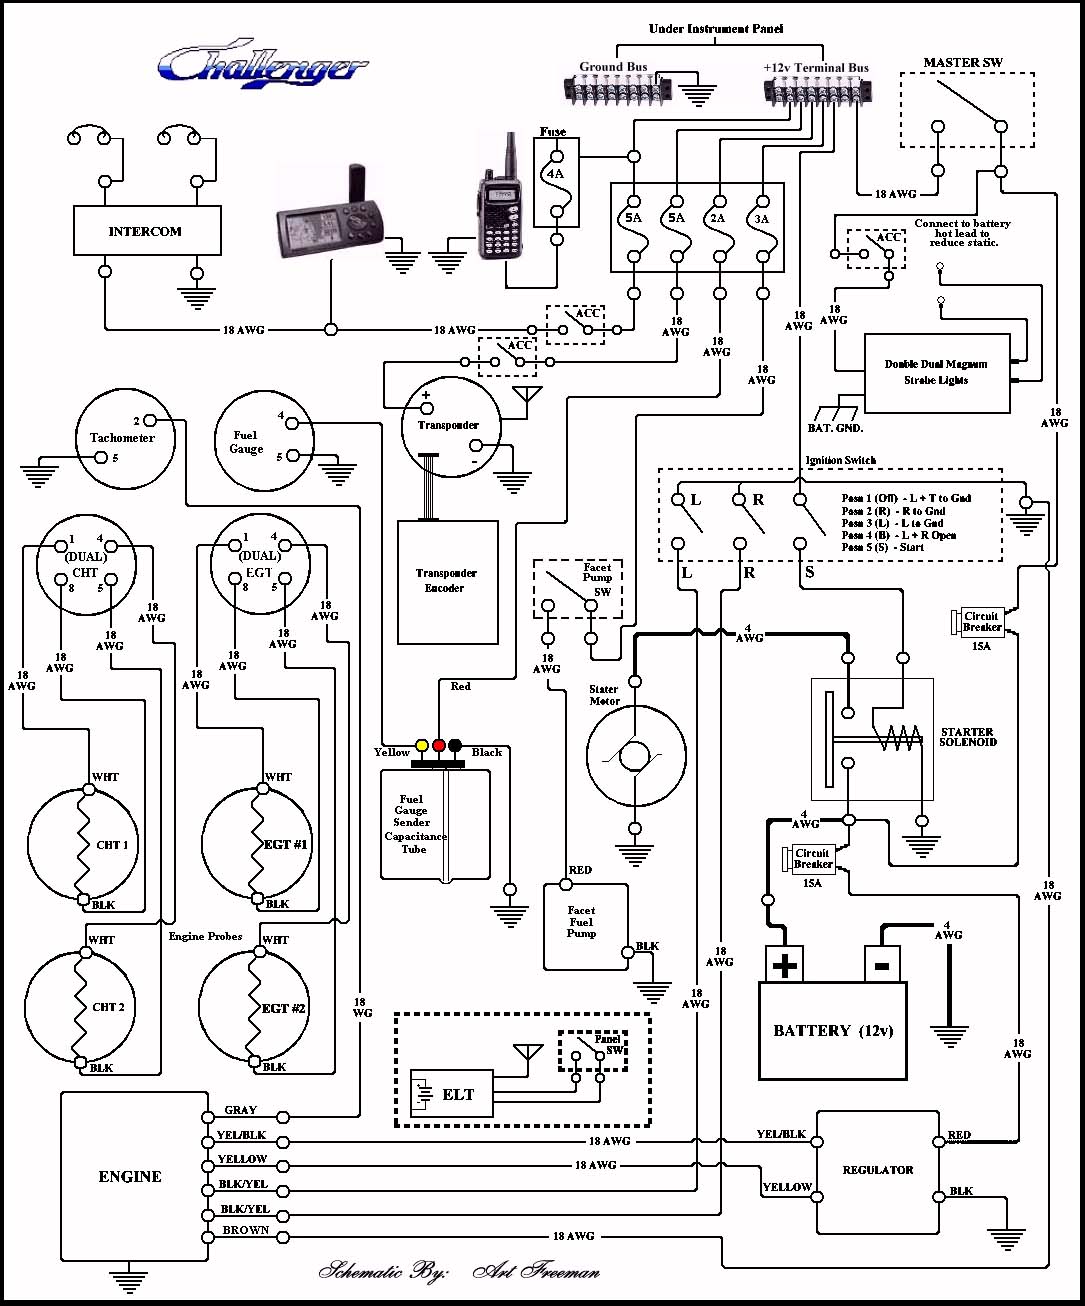 1969 cessna 172 magneto wiring diagram